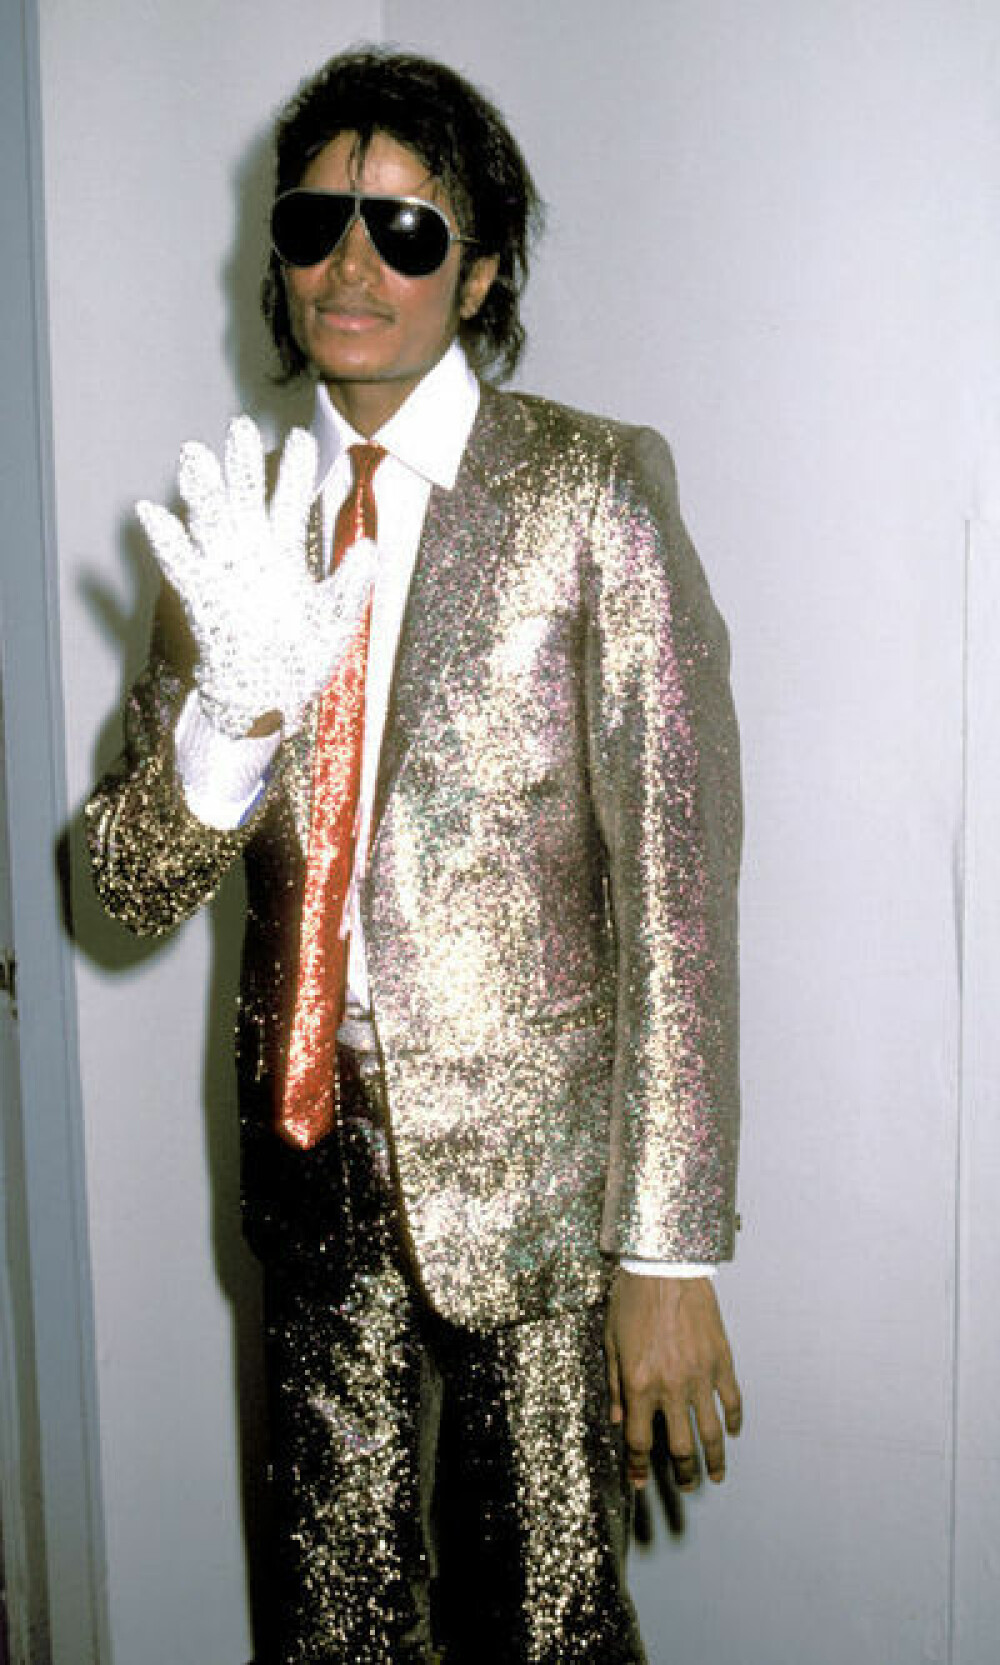 FOTO SOCANT. Prima imagine cu Michael Jackson mort - Imaginea 16